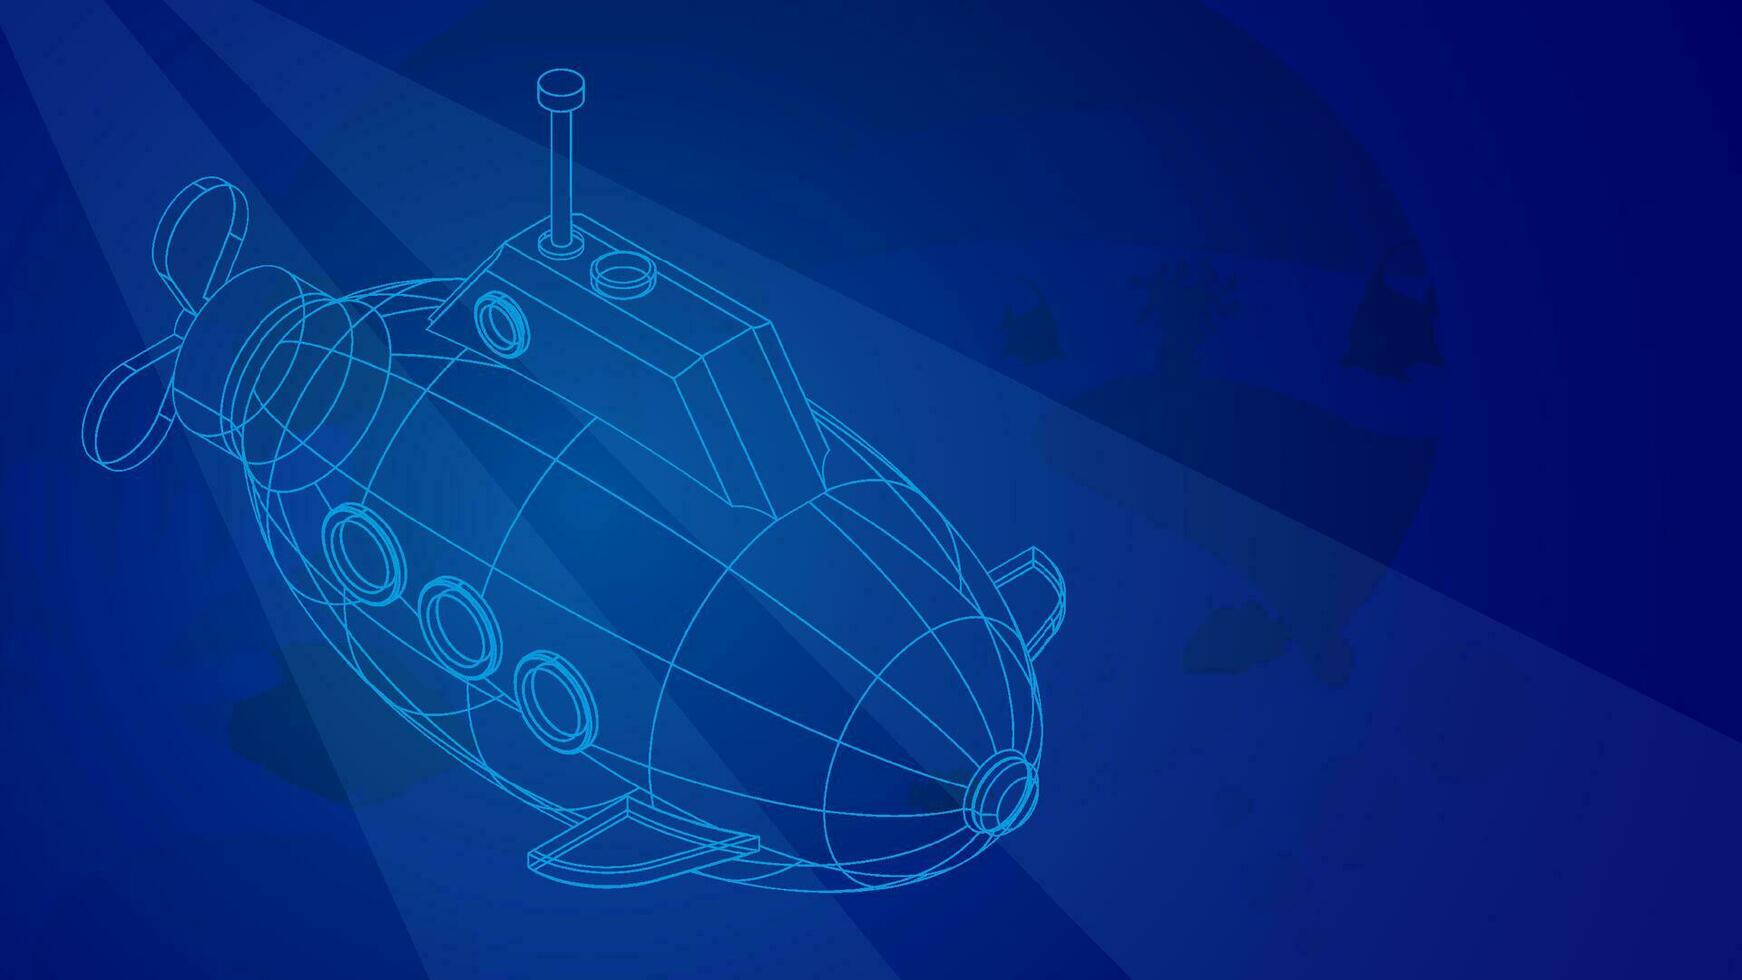 juguete submarino en estructura metálica bajo escuela politécnica malla en azul submarino antecedentes. niños juguetes y entretenimiento. submarino investigación. 3d vector